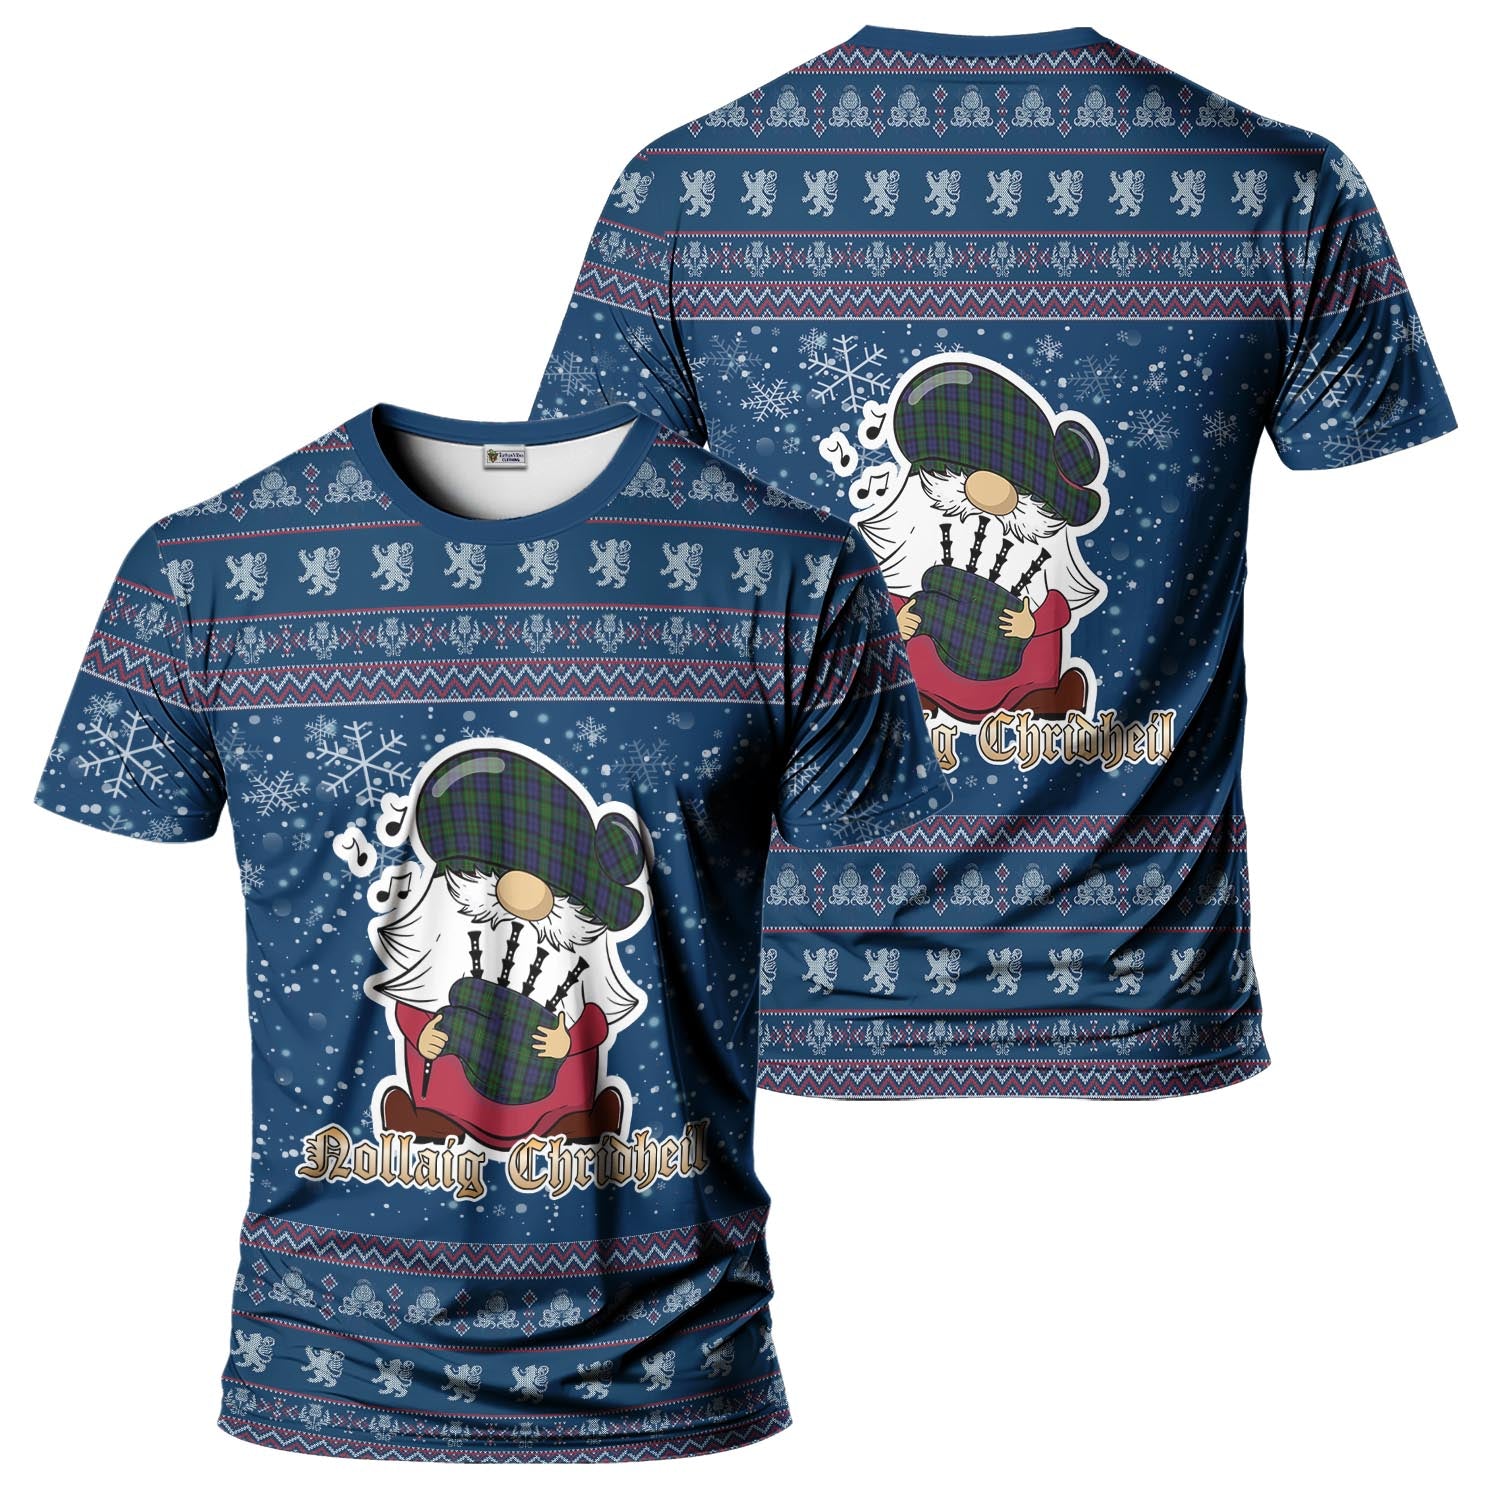 MacEwan Clan Christmas Family T-Shirt with Funny Gnome Playing Bagpipes Kid's Shirt Blue - Tartanvibesclothing